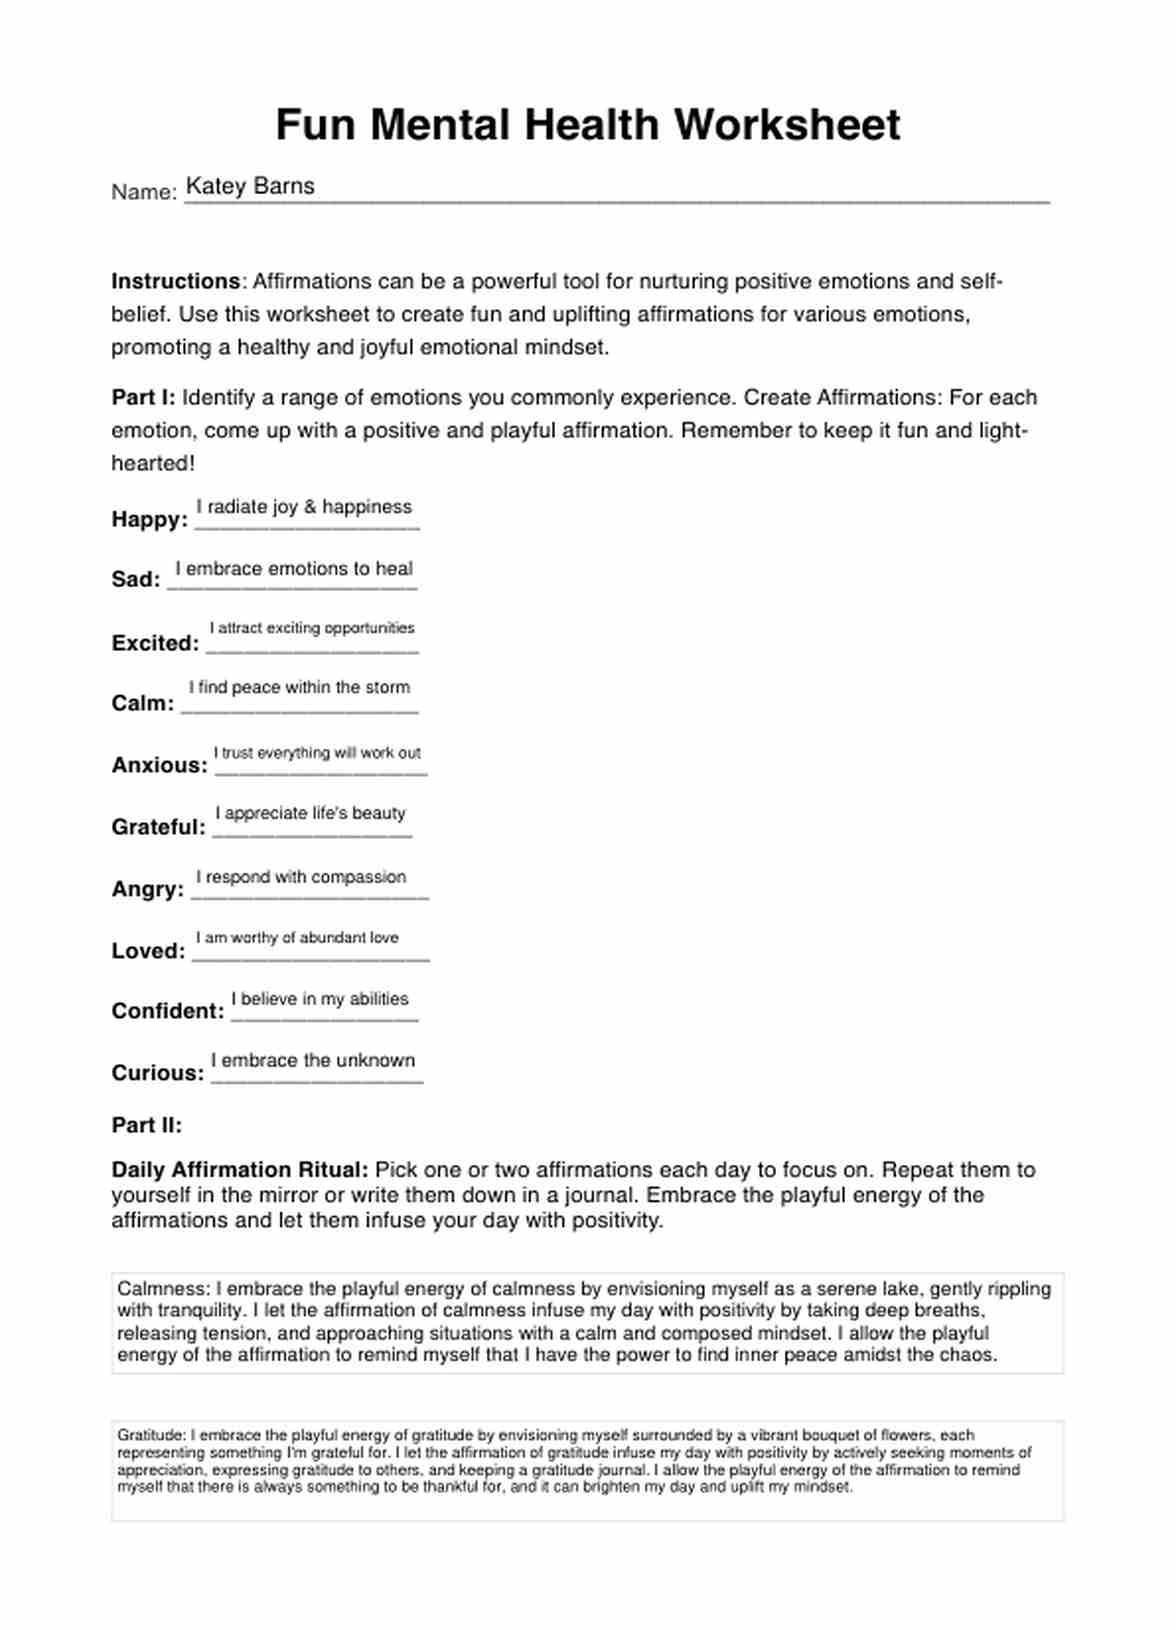 Fun Mental Health Worksheets PDF Example